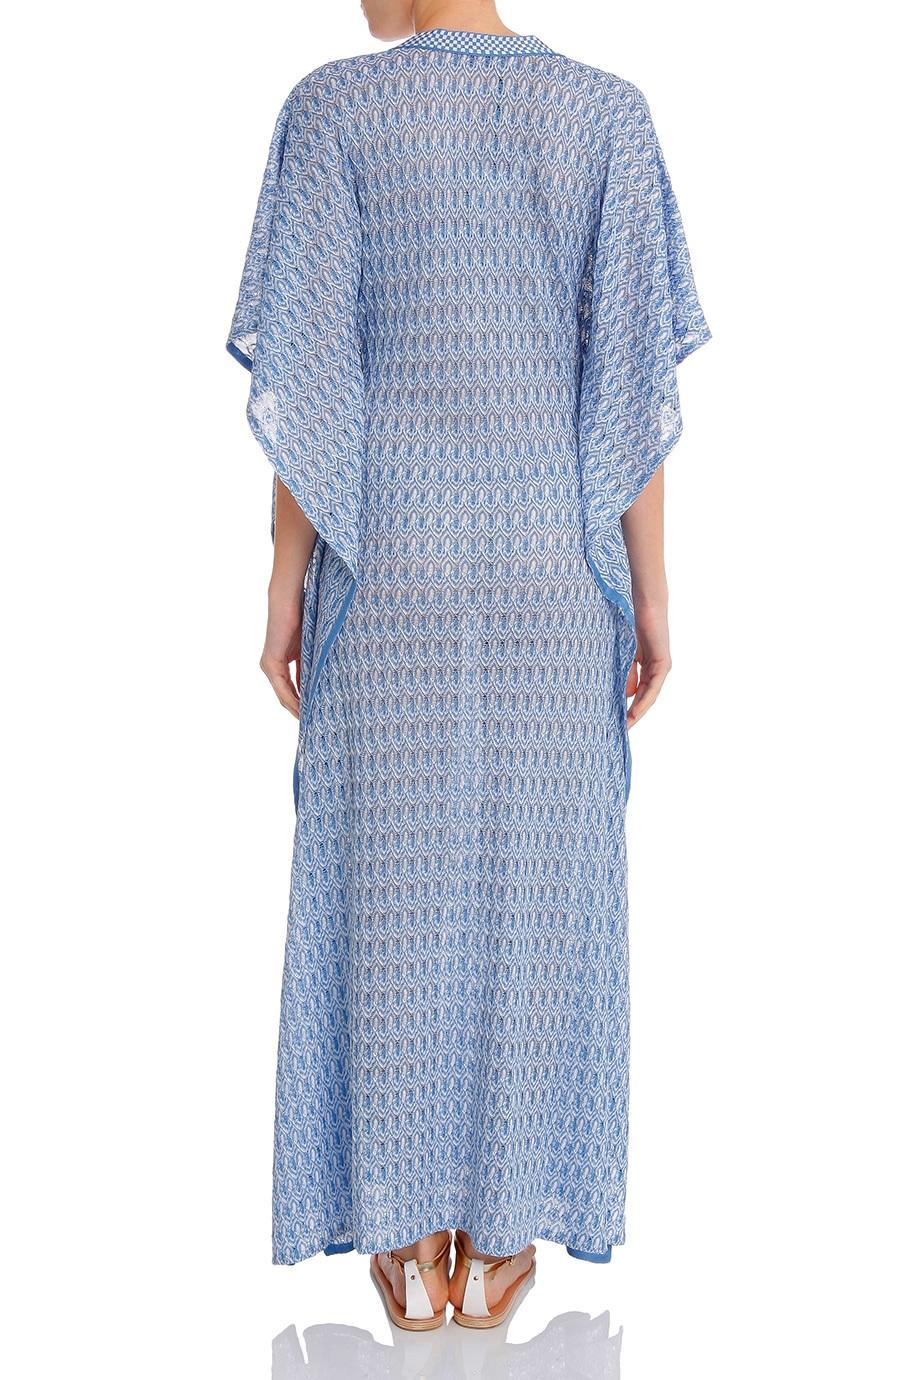 MISSONI Blue Chevron Crochet Knit Kaftan Maxi Dress Gown 42 For Sale 5